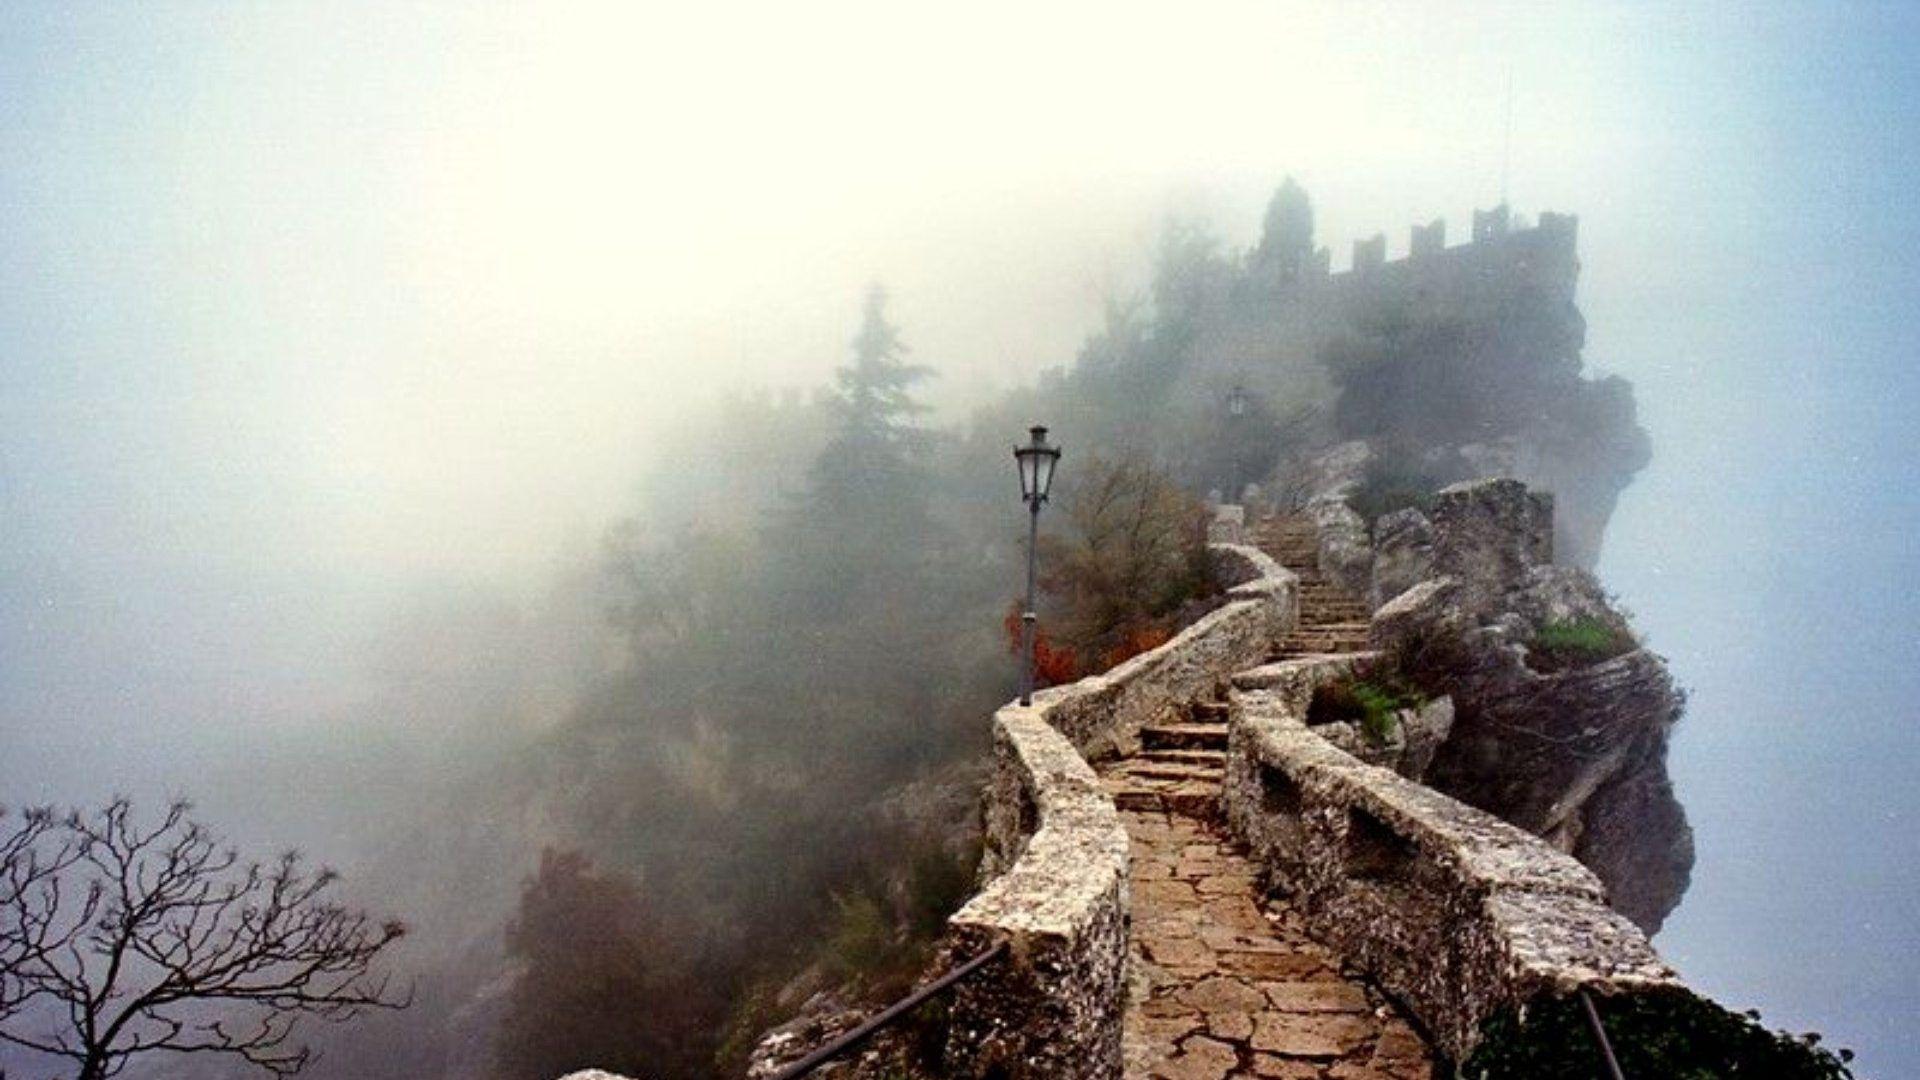 Ancient: Way Guaita Fortress Graita Fortrress San Marino Italy Fog